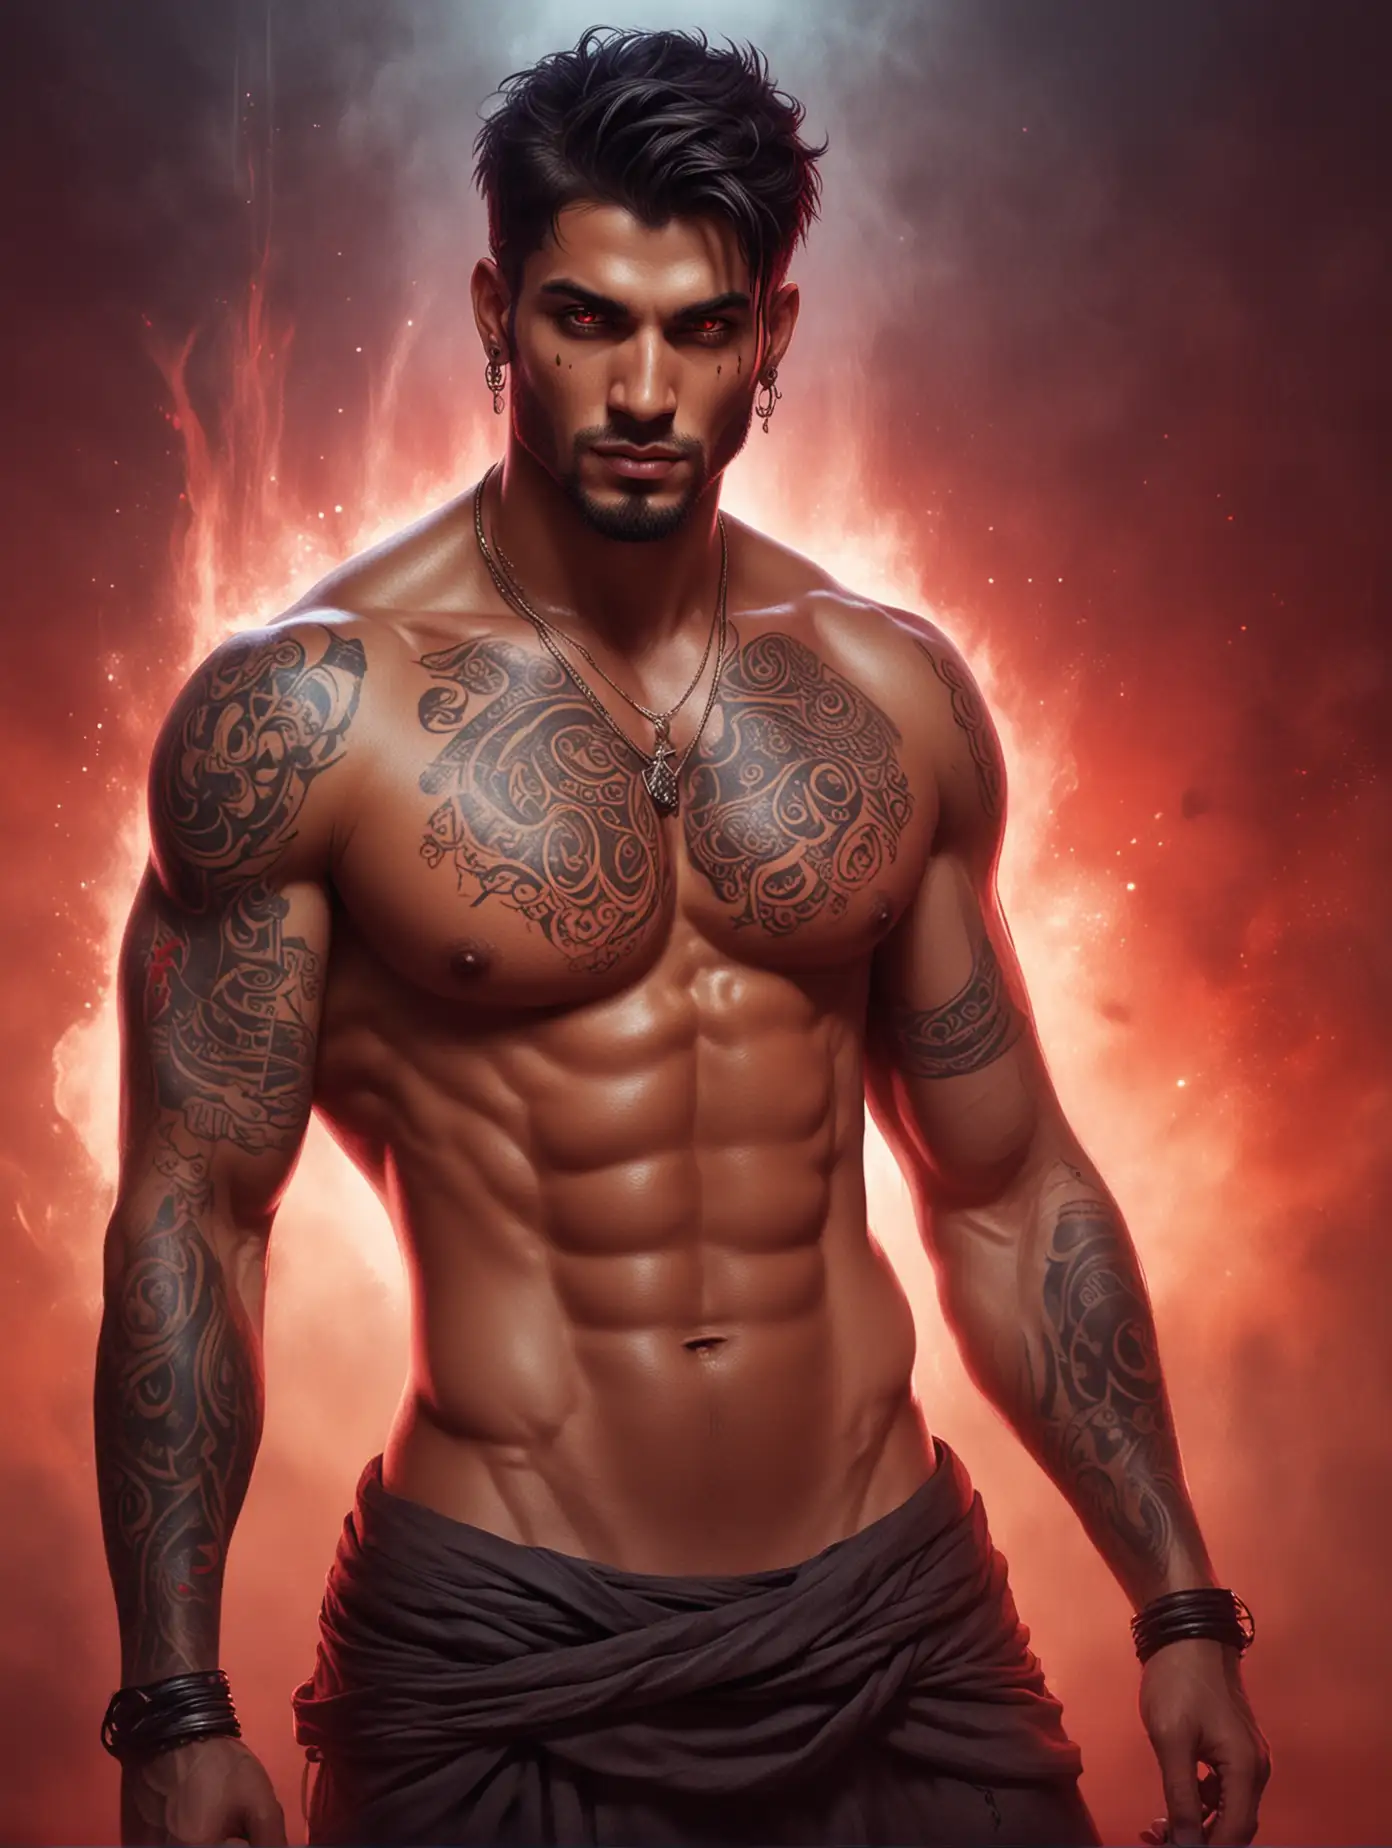 Seductive Shirtless Djinn with Intriguing Tattoos in Crimson Haze